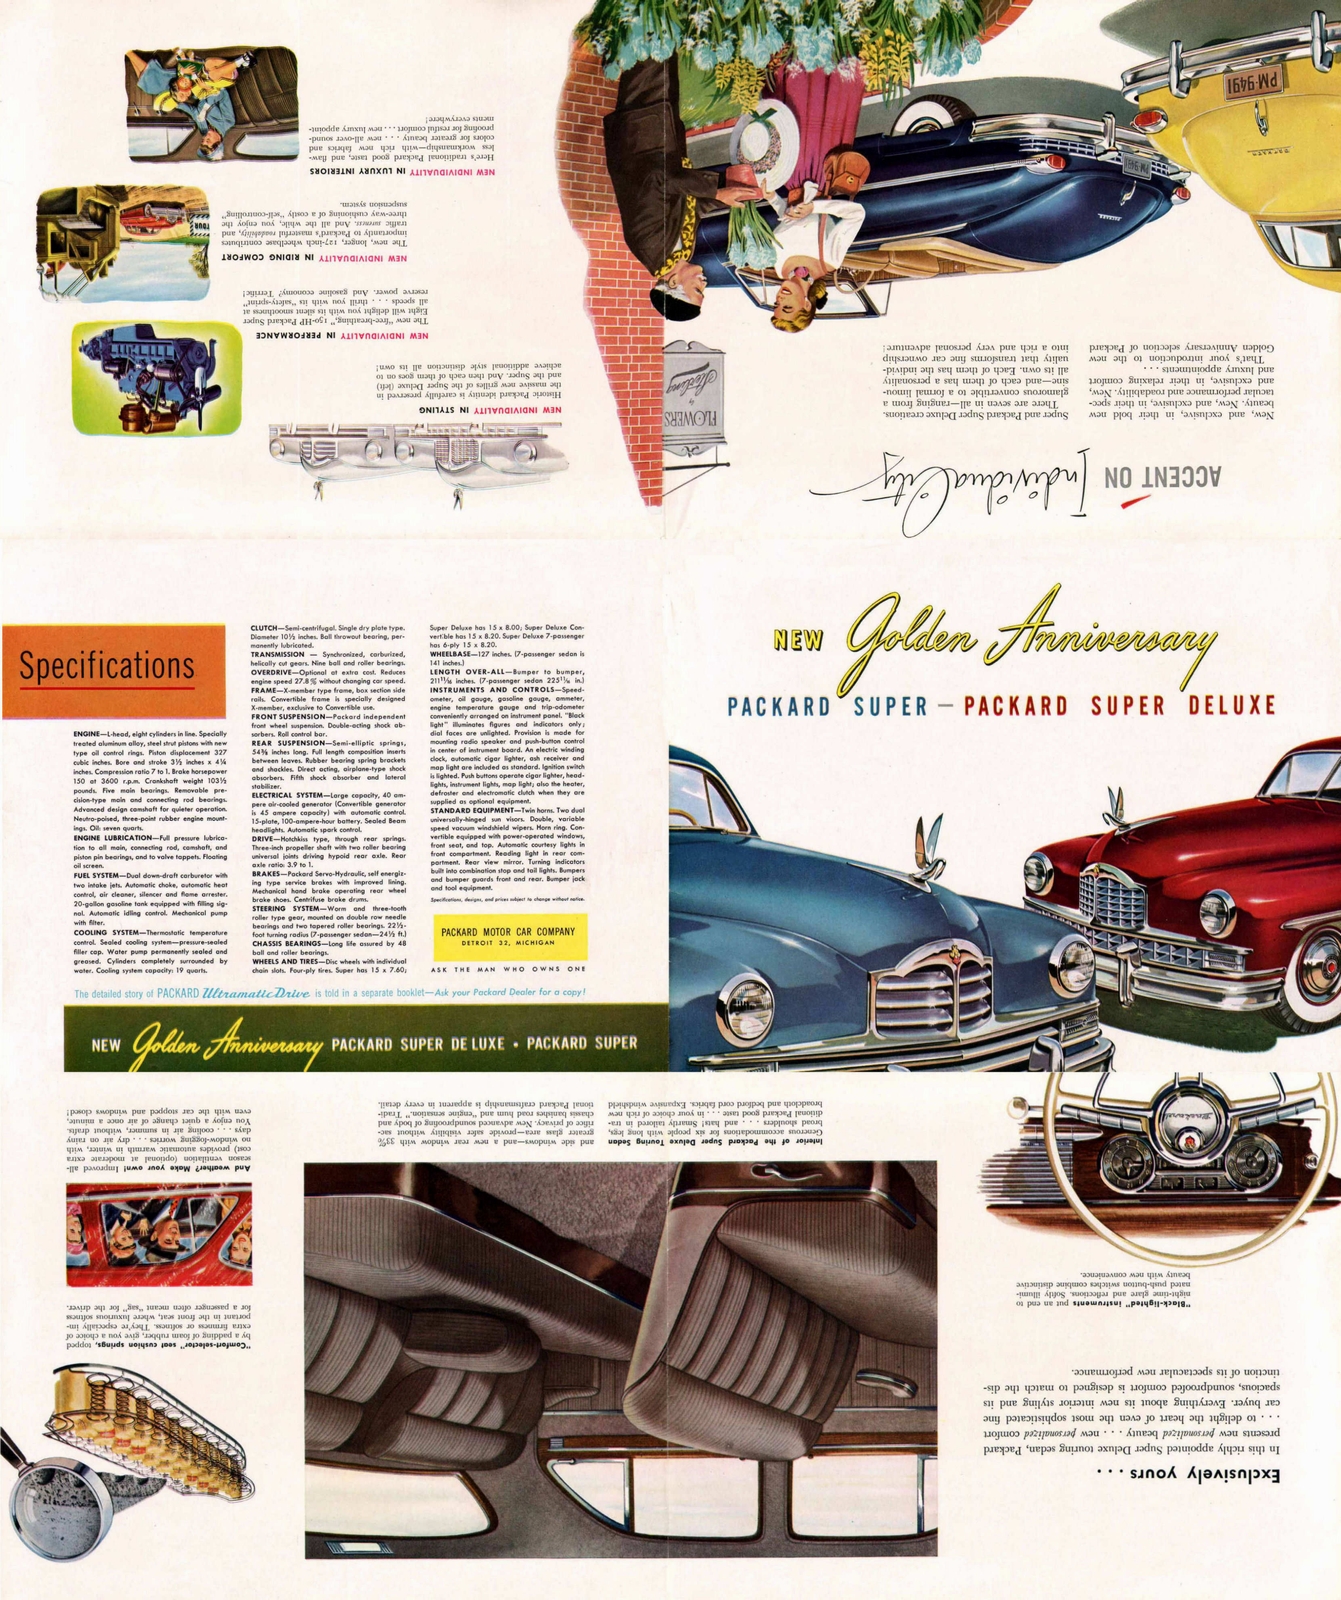 n_1949 Packard Super Foldout-01 to 06.jpg